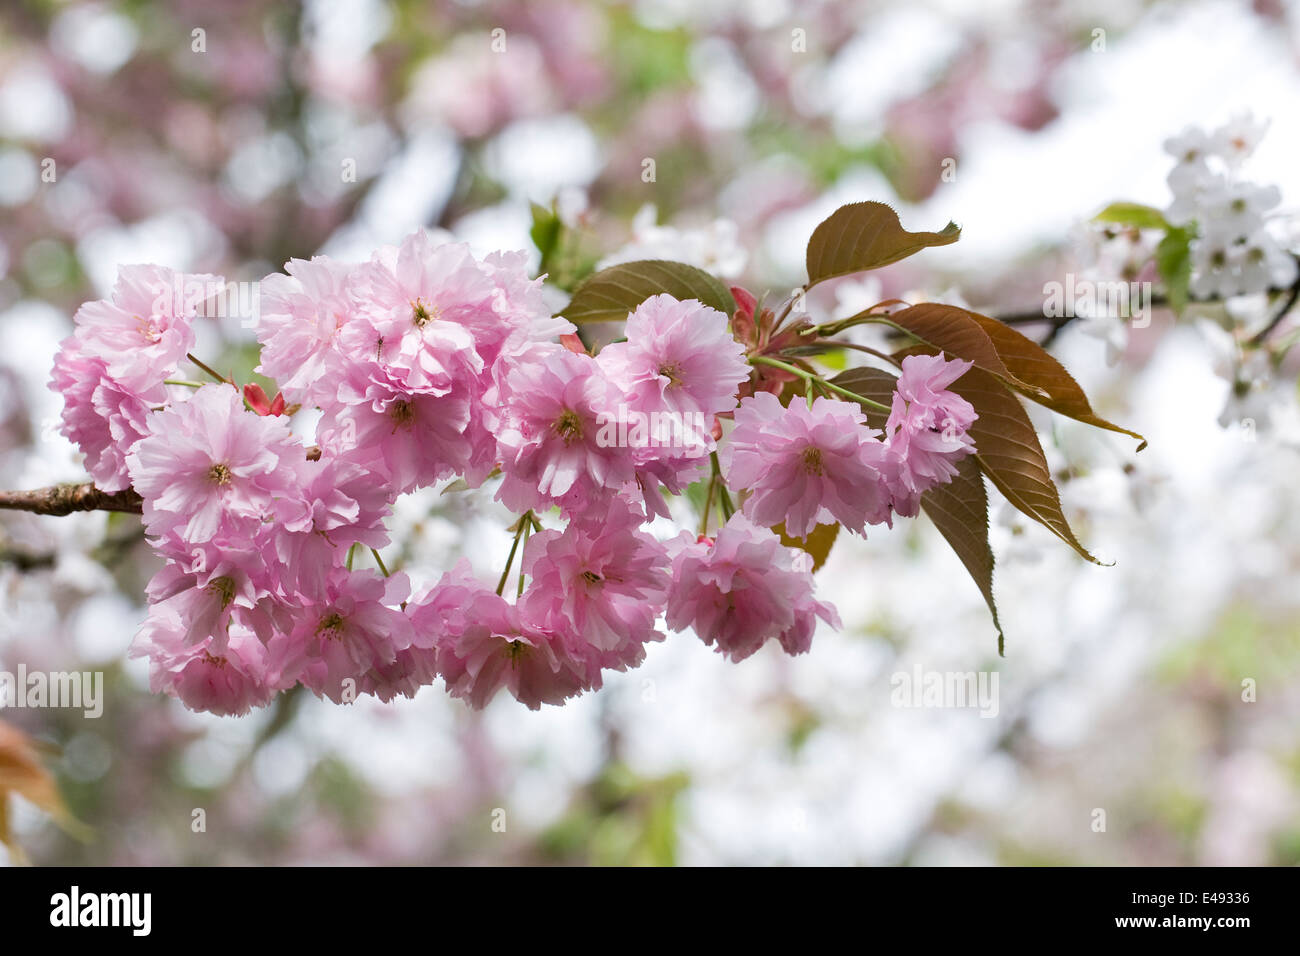 Prunus blossom. Cherry blossom in an English garden. Stock Photo